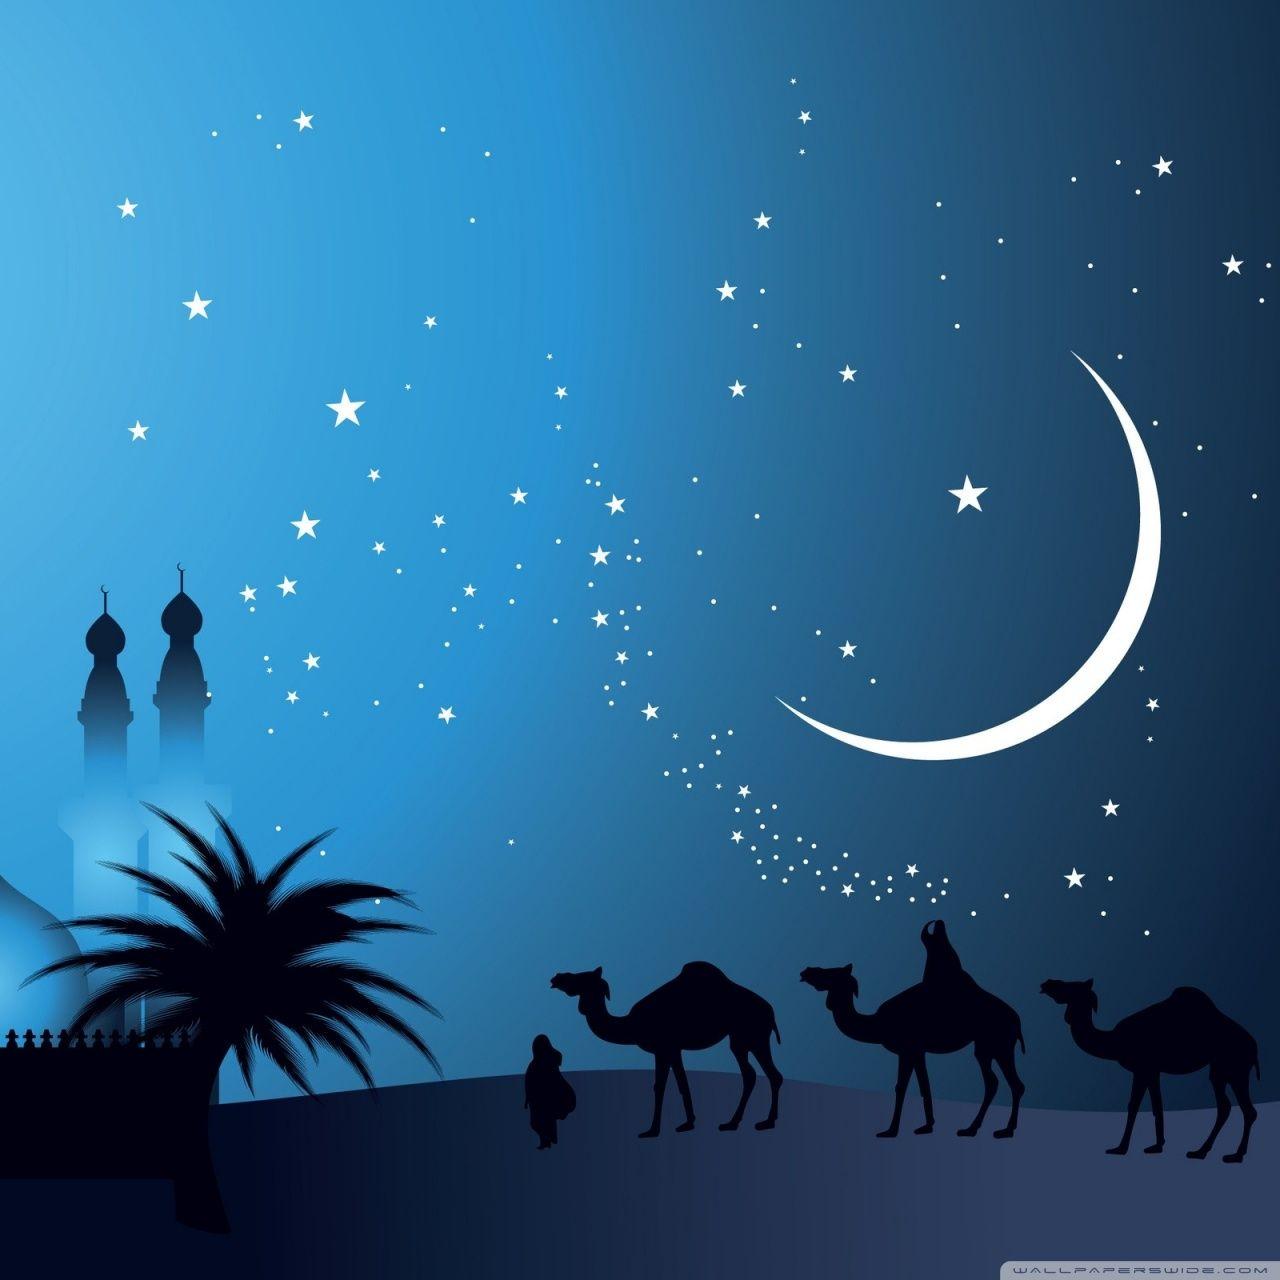 Arabian nights | Art wallpaper iphone, Minimal wallpaper, Scenery wallpaper